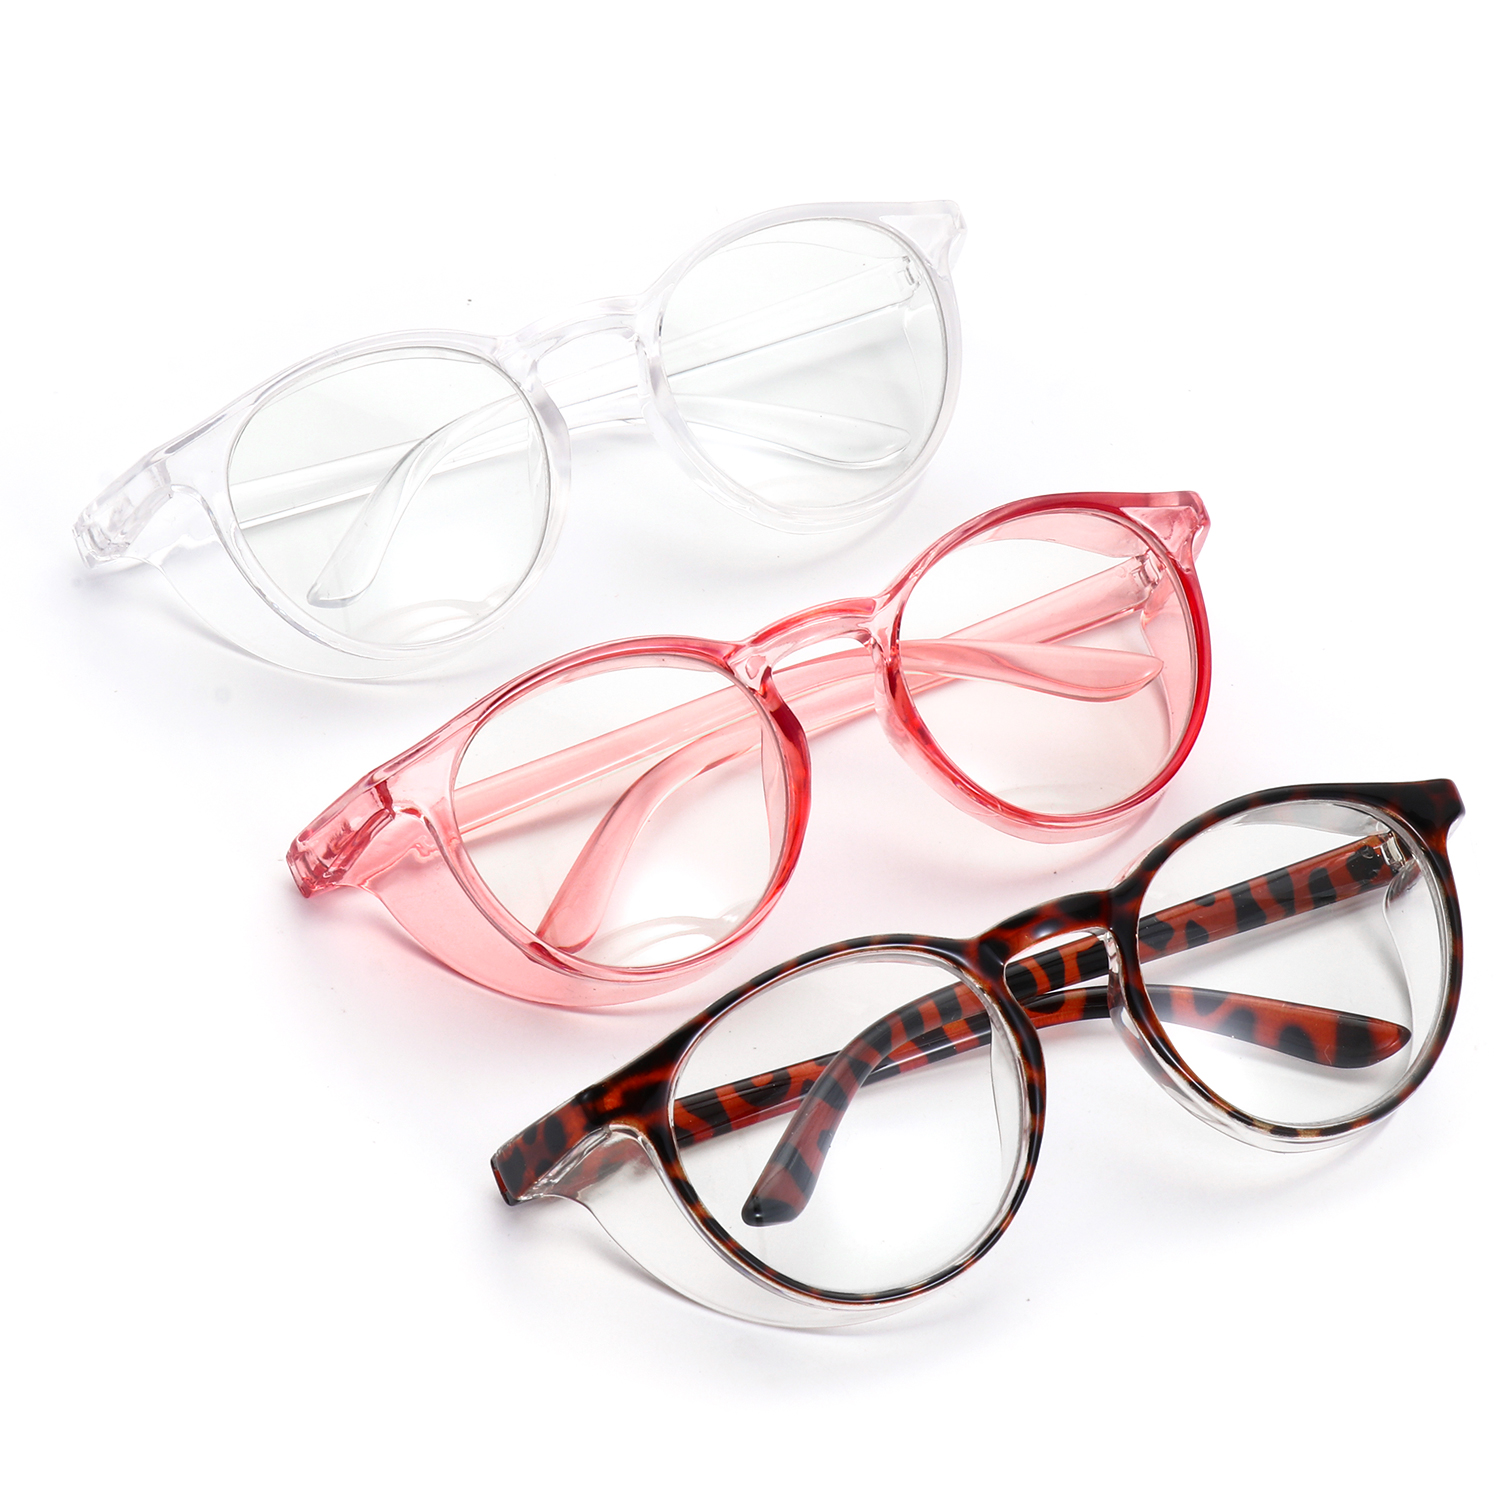 Transparent Goggles Anti Fog Safety Goggles UV400 Protective Glasses,Blue Light Blocking Eyeglasses for Men Women